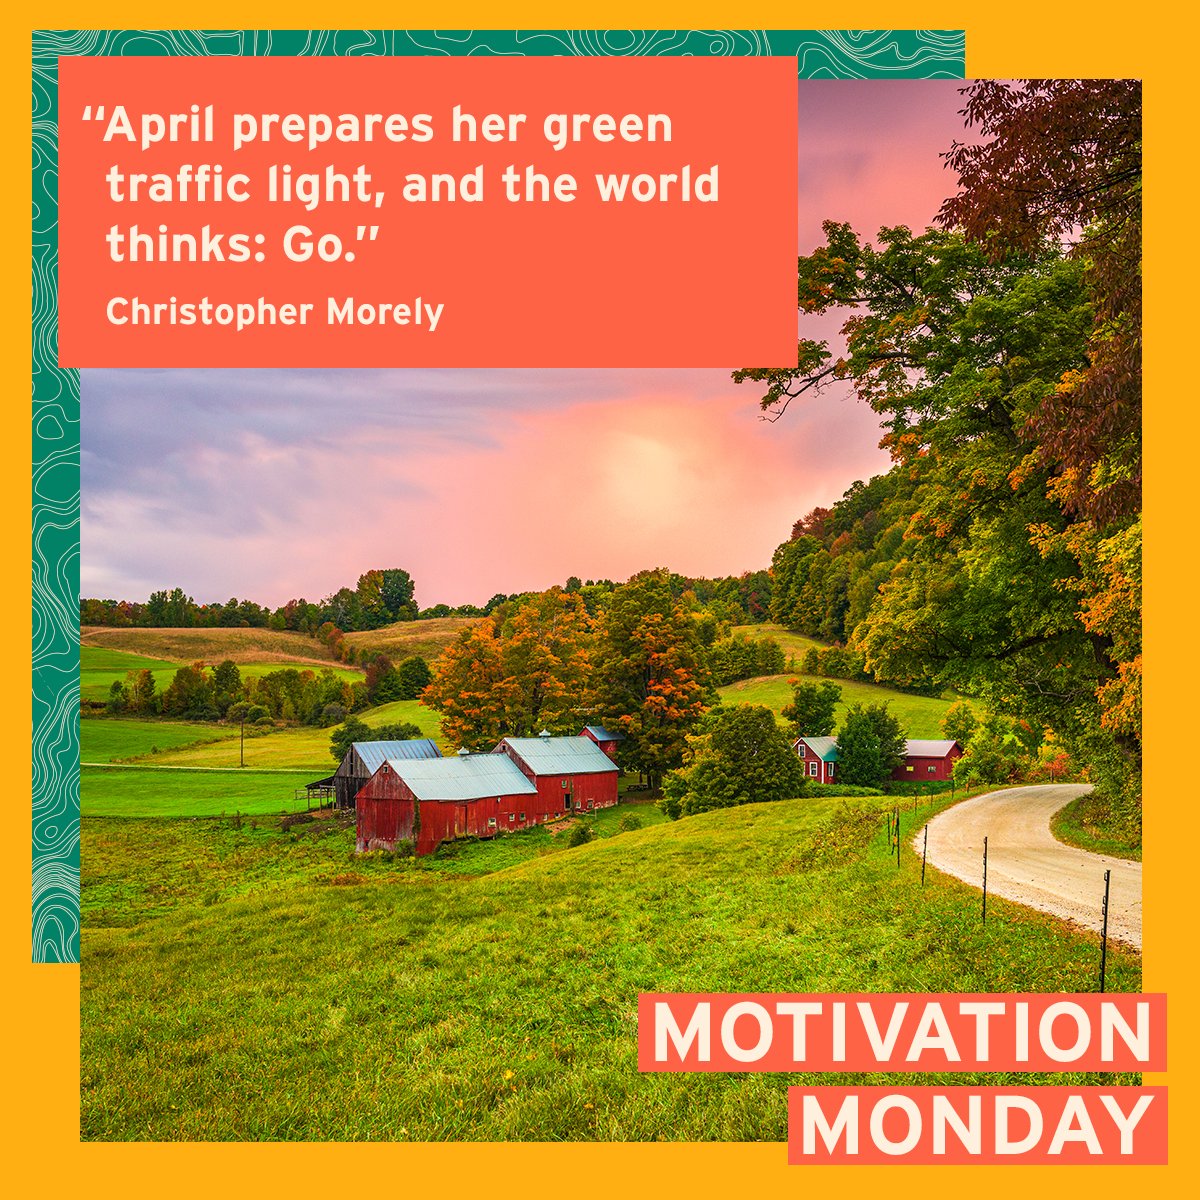 Have a wonderful day! 🙌🚐 #GORVING #MotivationMonday